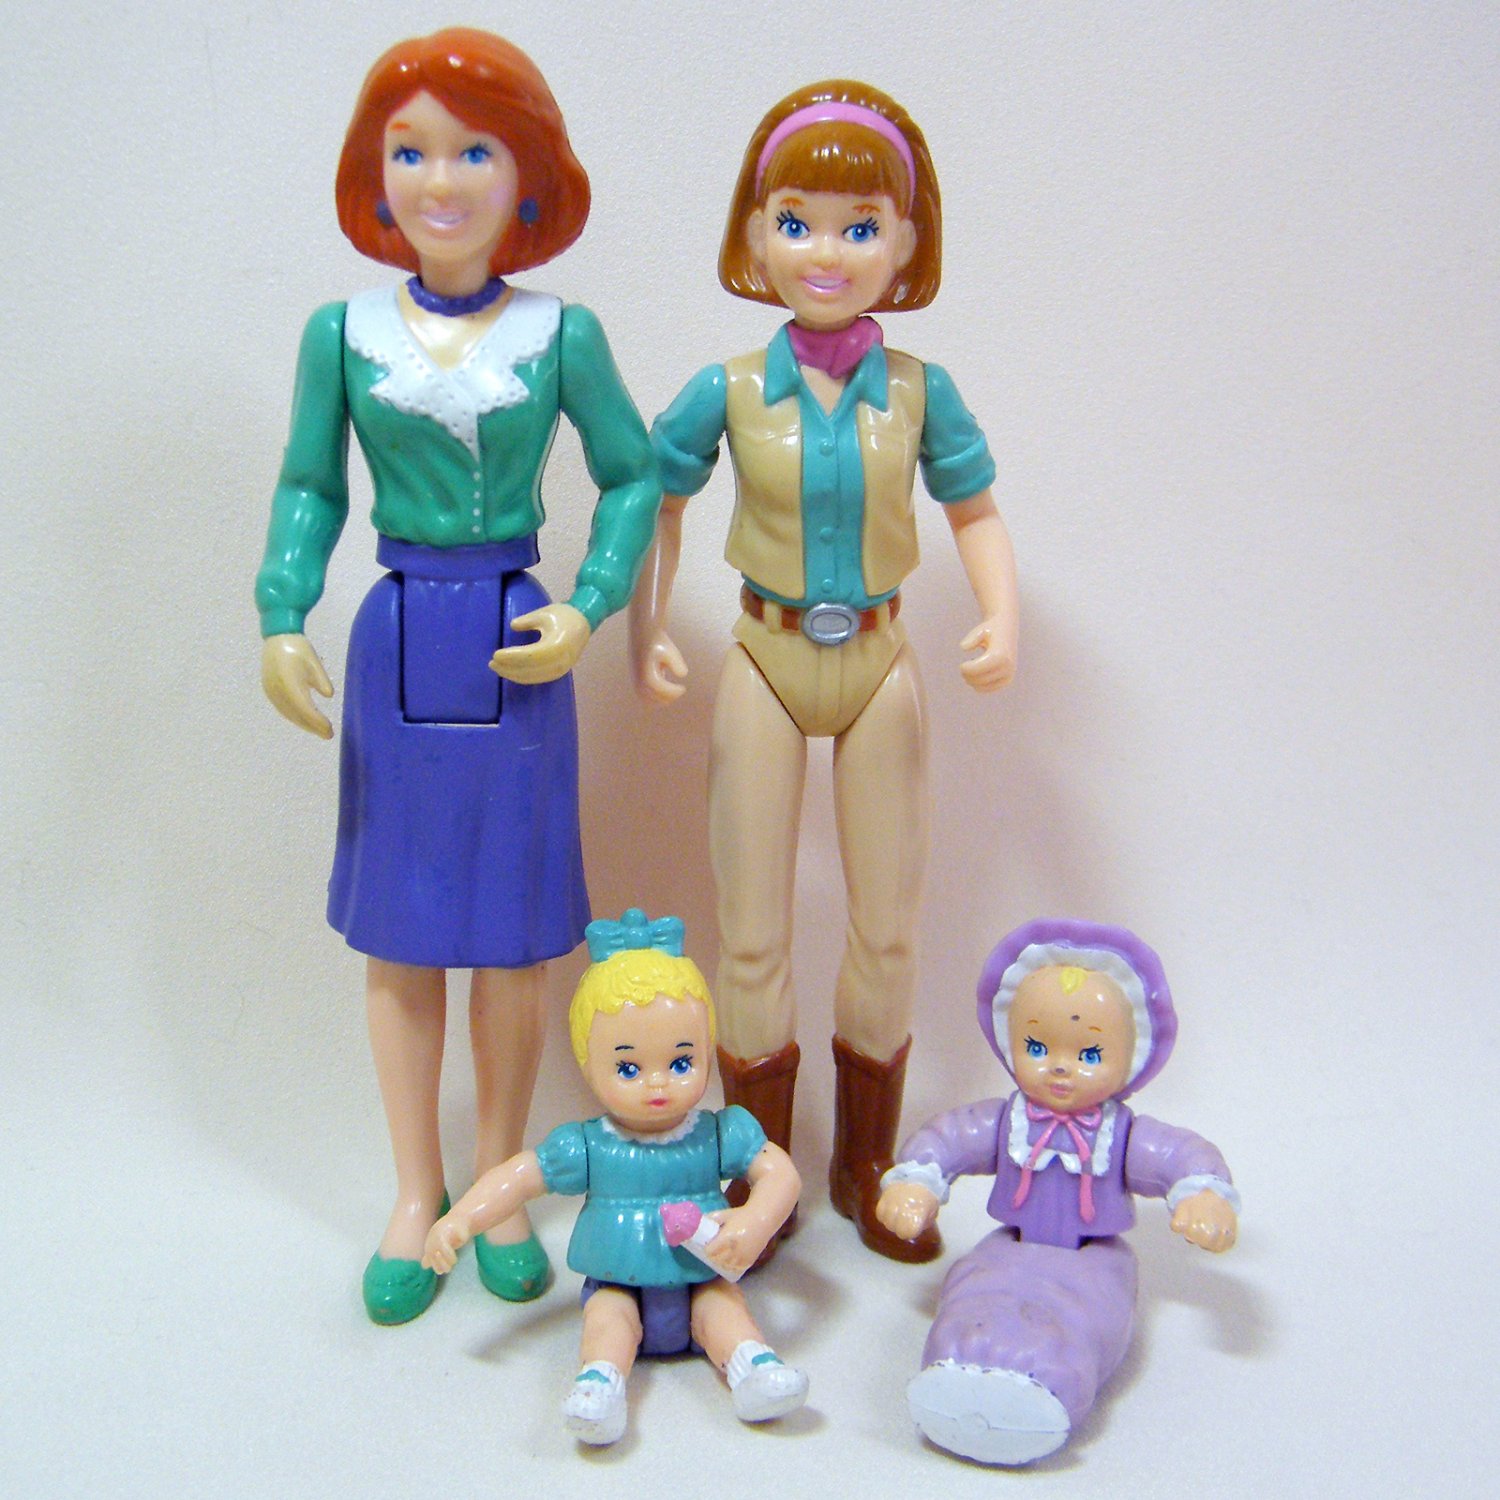 Playskool Dollhouse Figures HORSE RIDER, MOM and 2 Babies